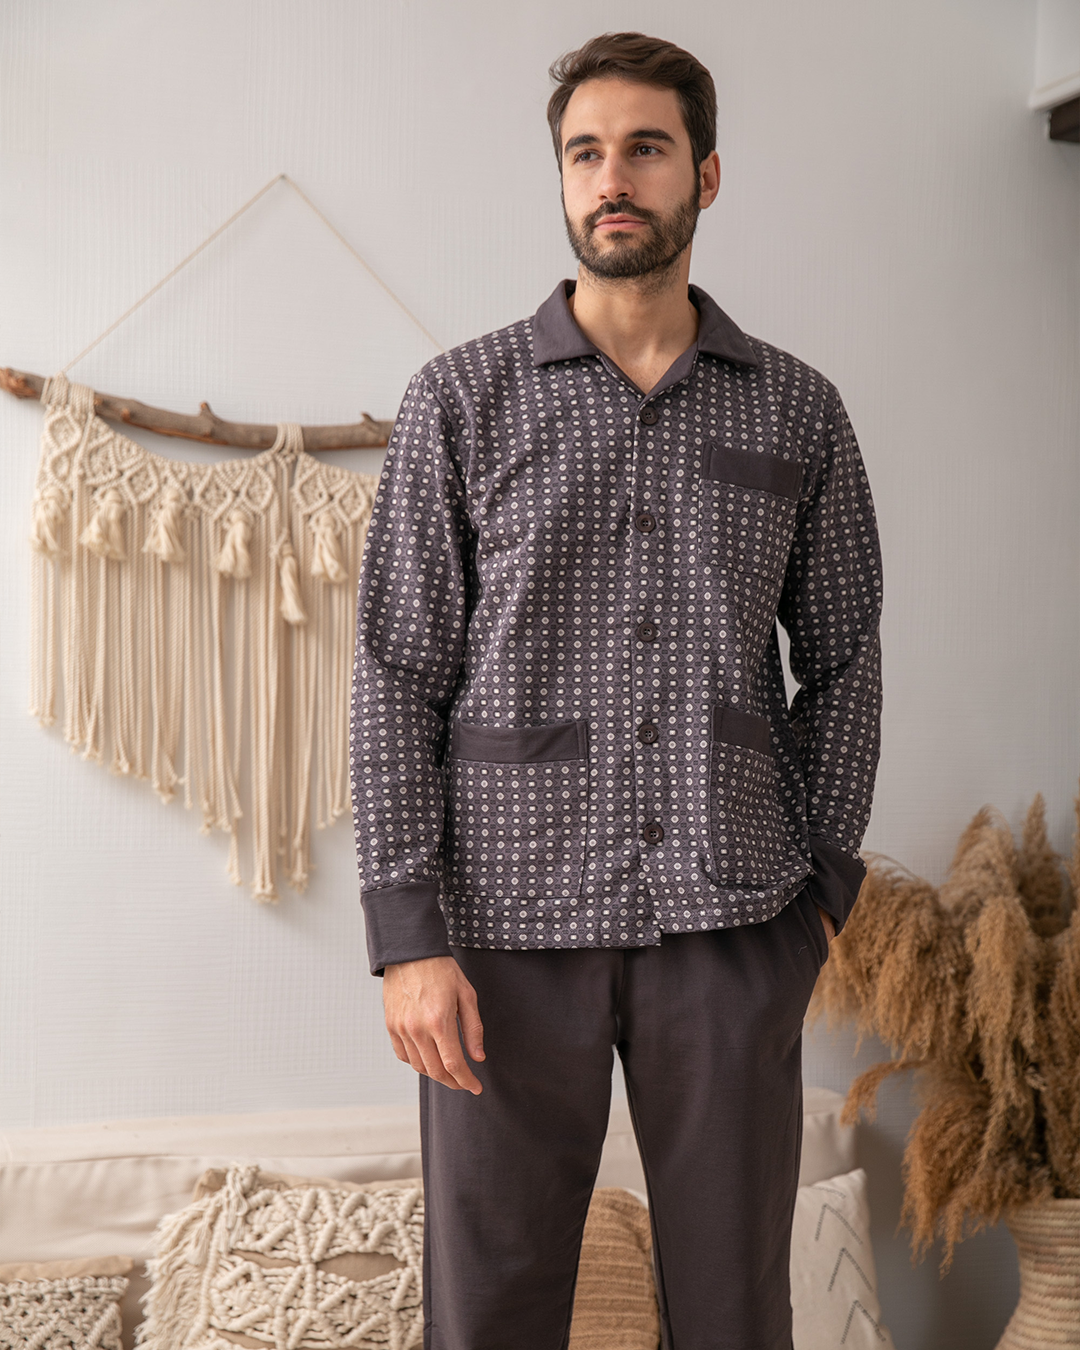 Men's pajamas, classic rotary shapes